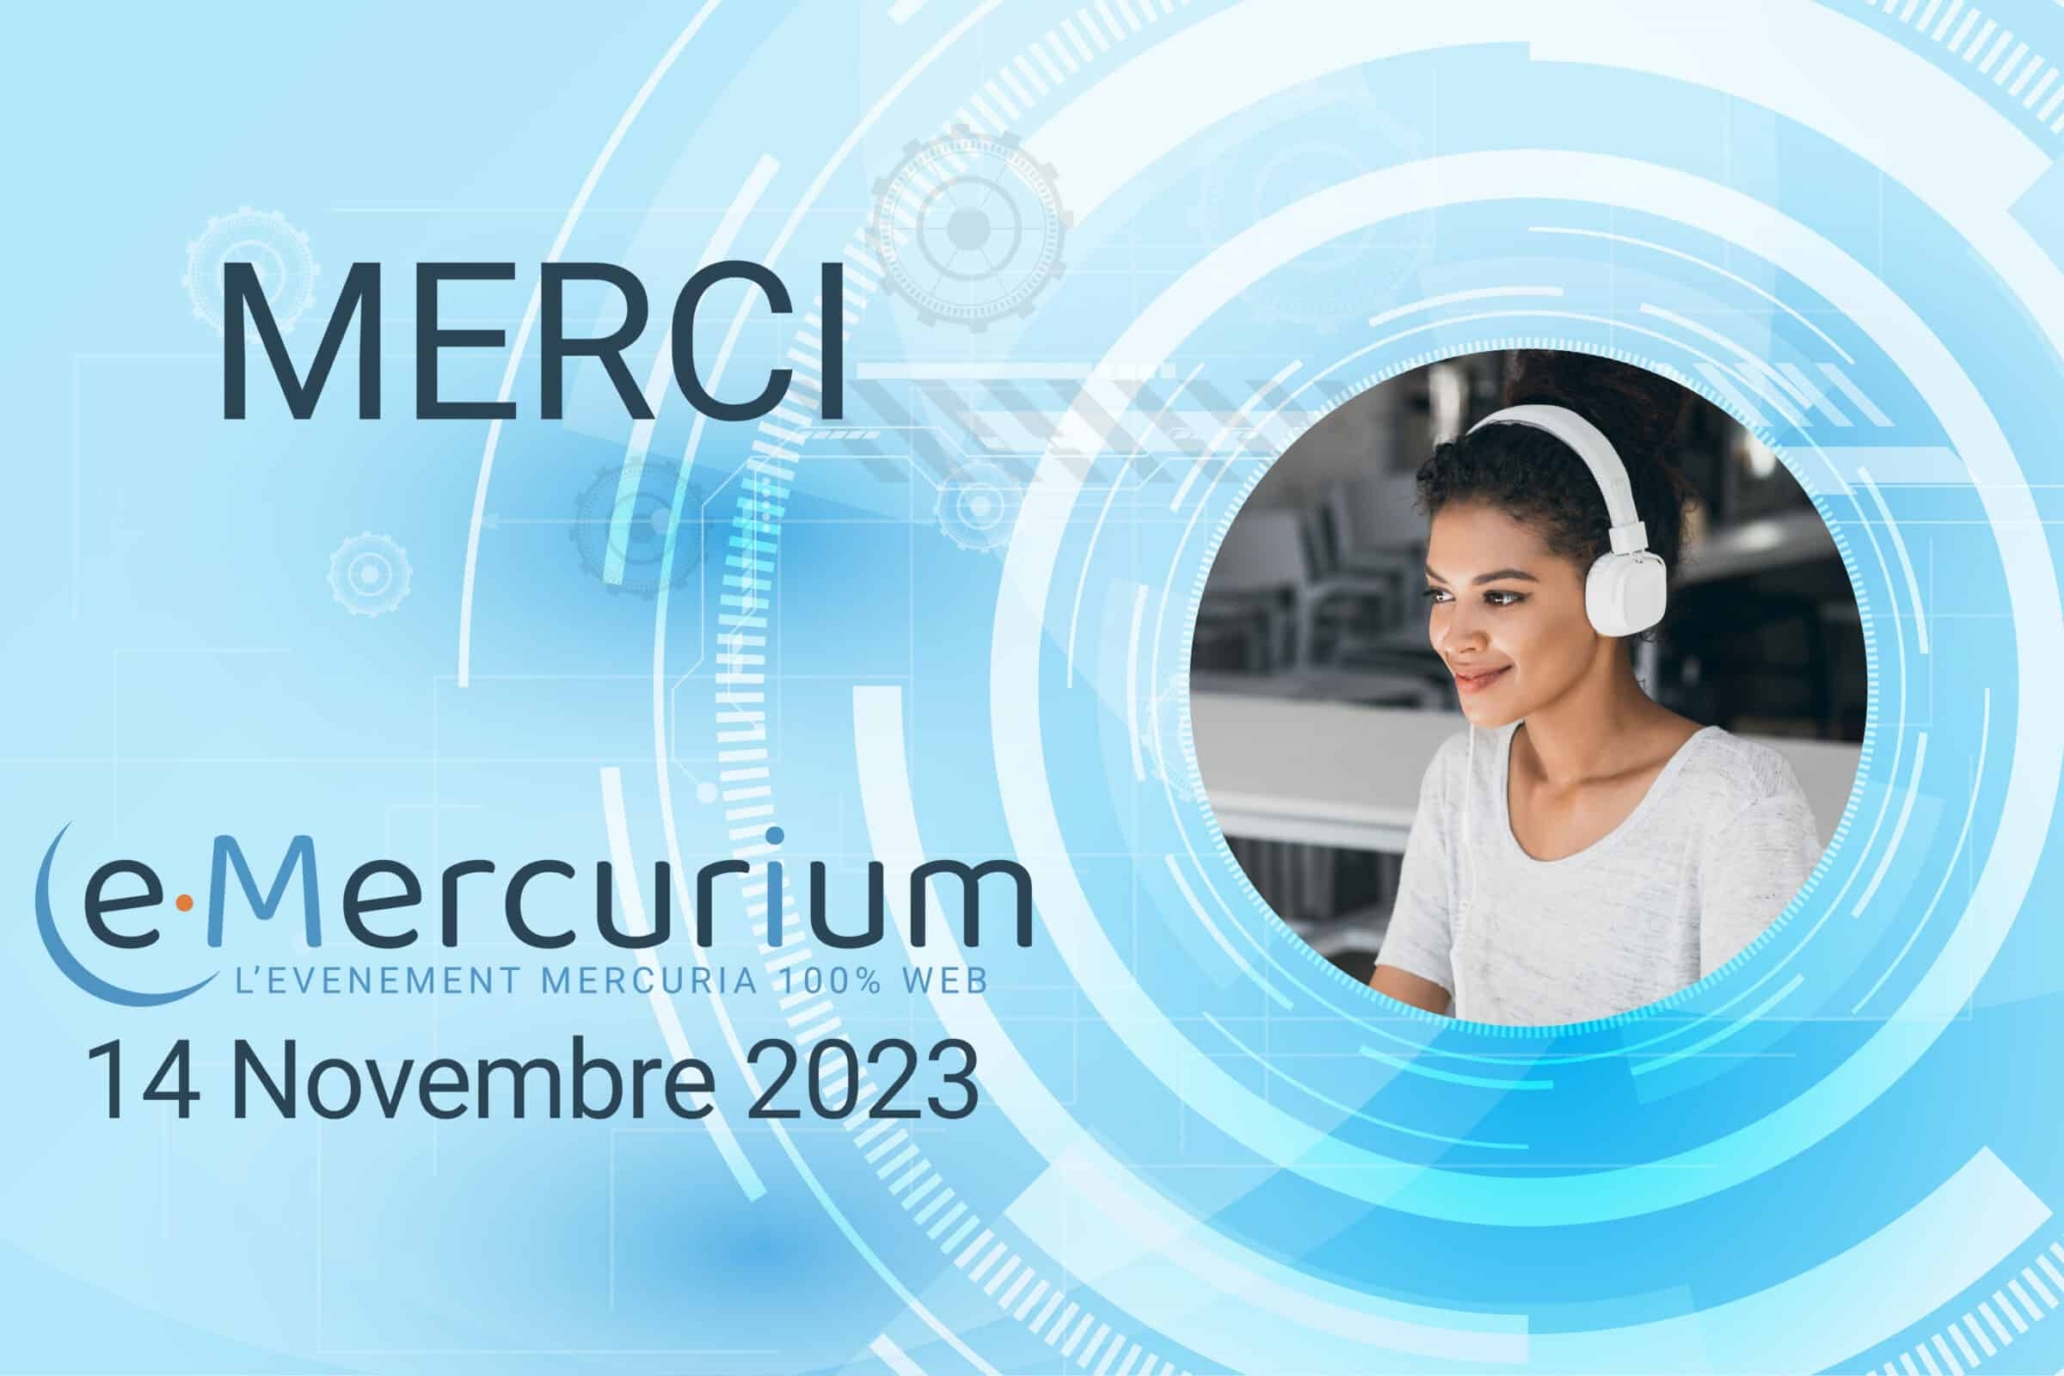 Mercuria e-Mercuria 2023 merci évènement digital logiciels